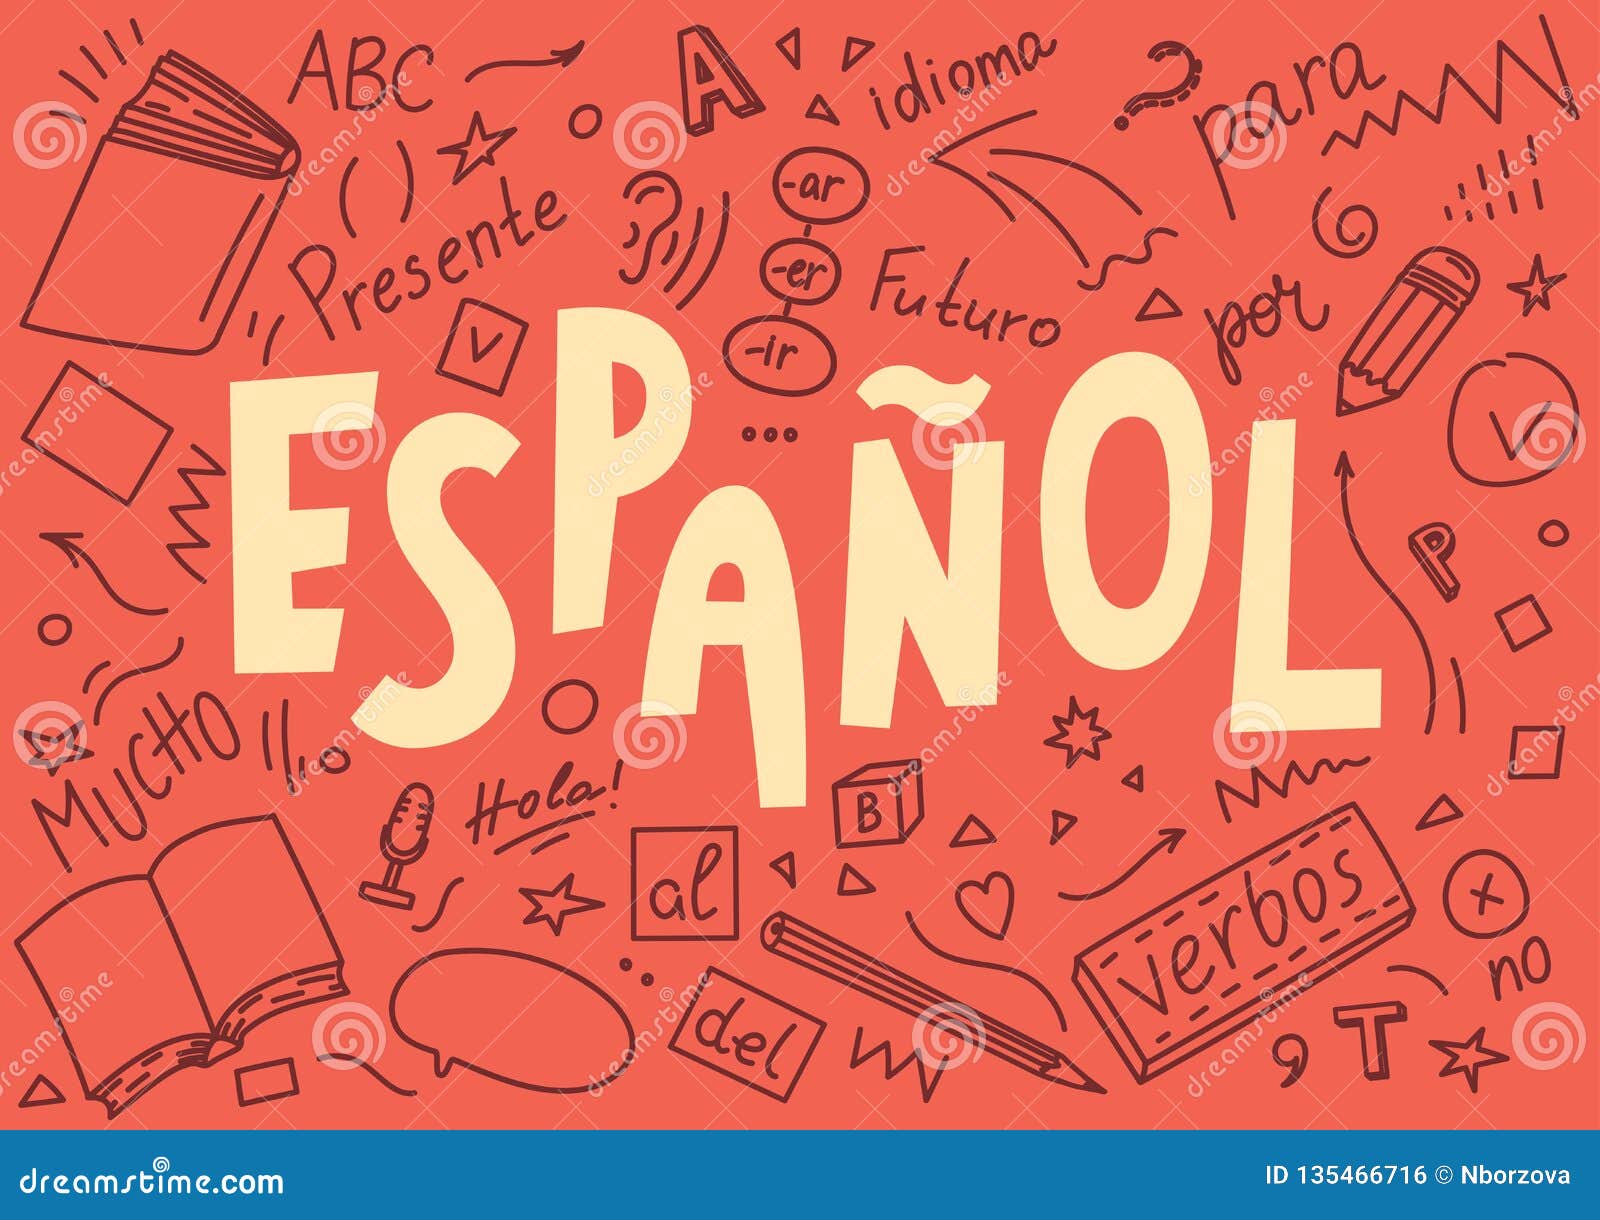 espanol. translation `spanish`. language hand drawn doodles and lettering.